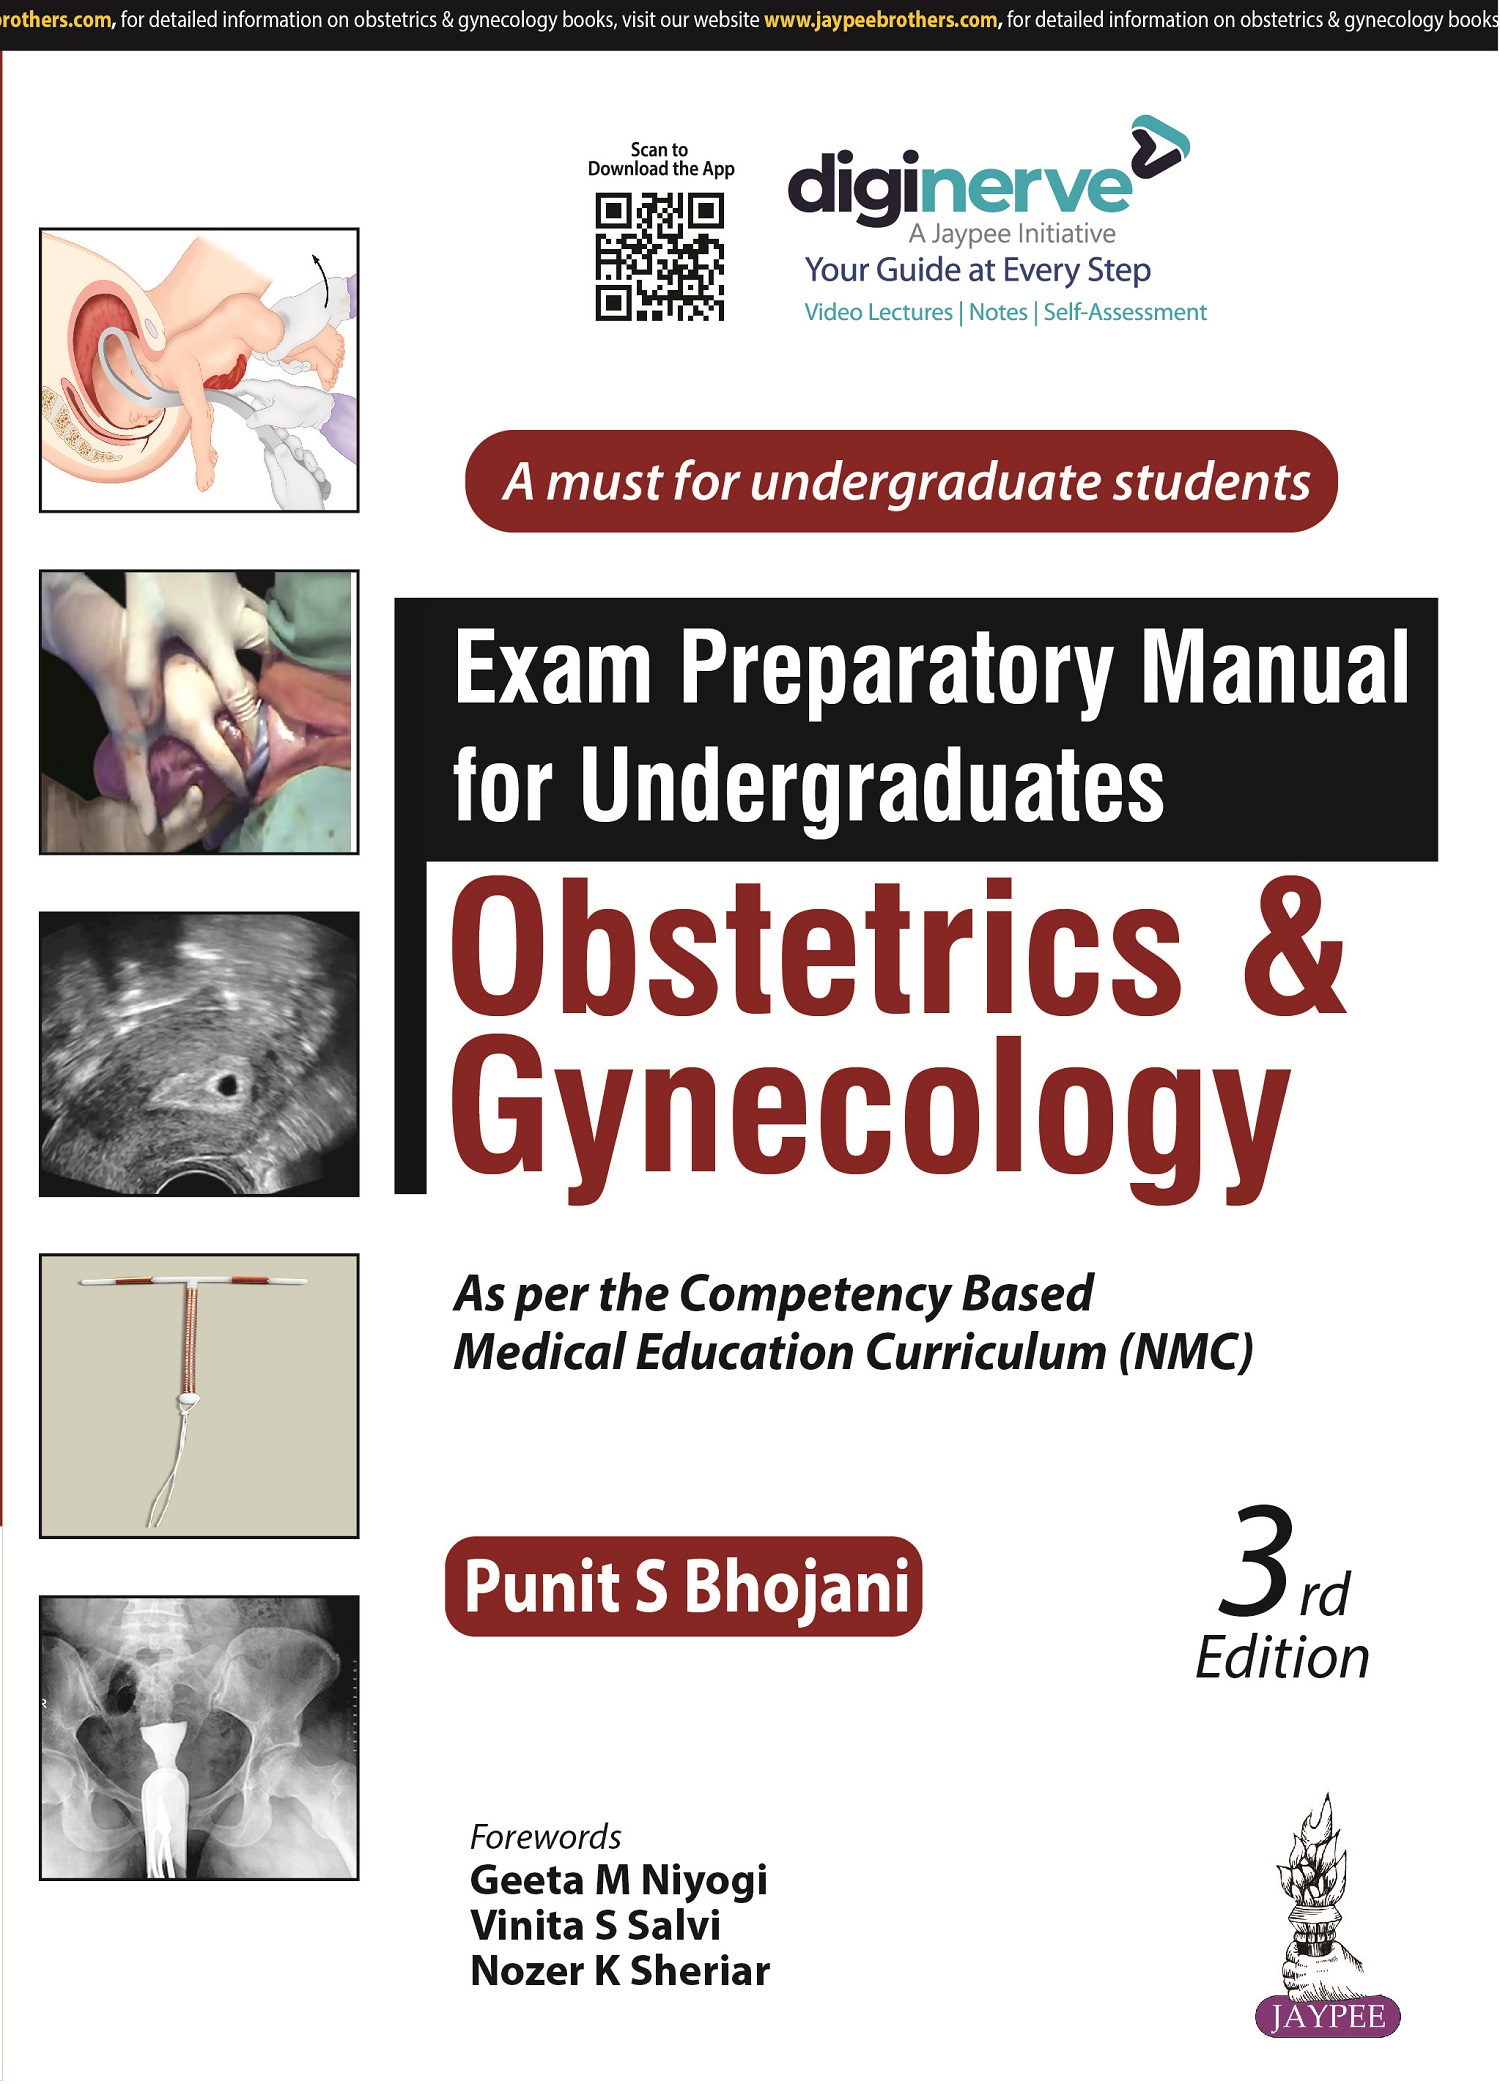 Exam Preparatory Manual for Undergraduates Obstetrics & Gynecology